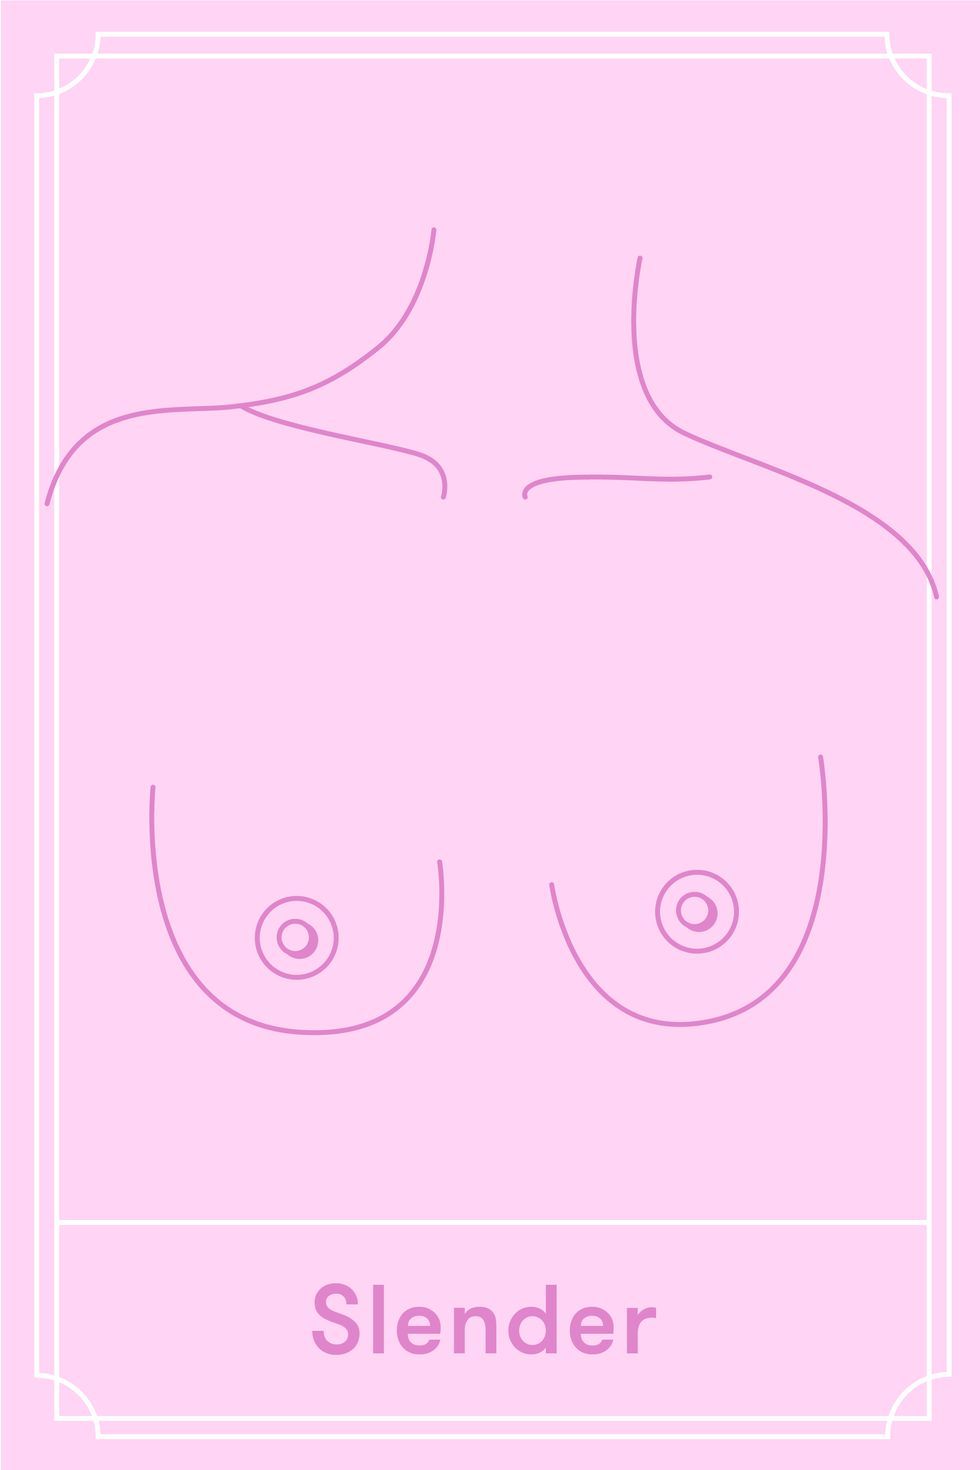 Slender type of boobs